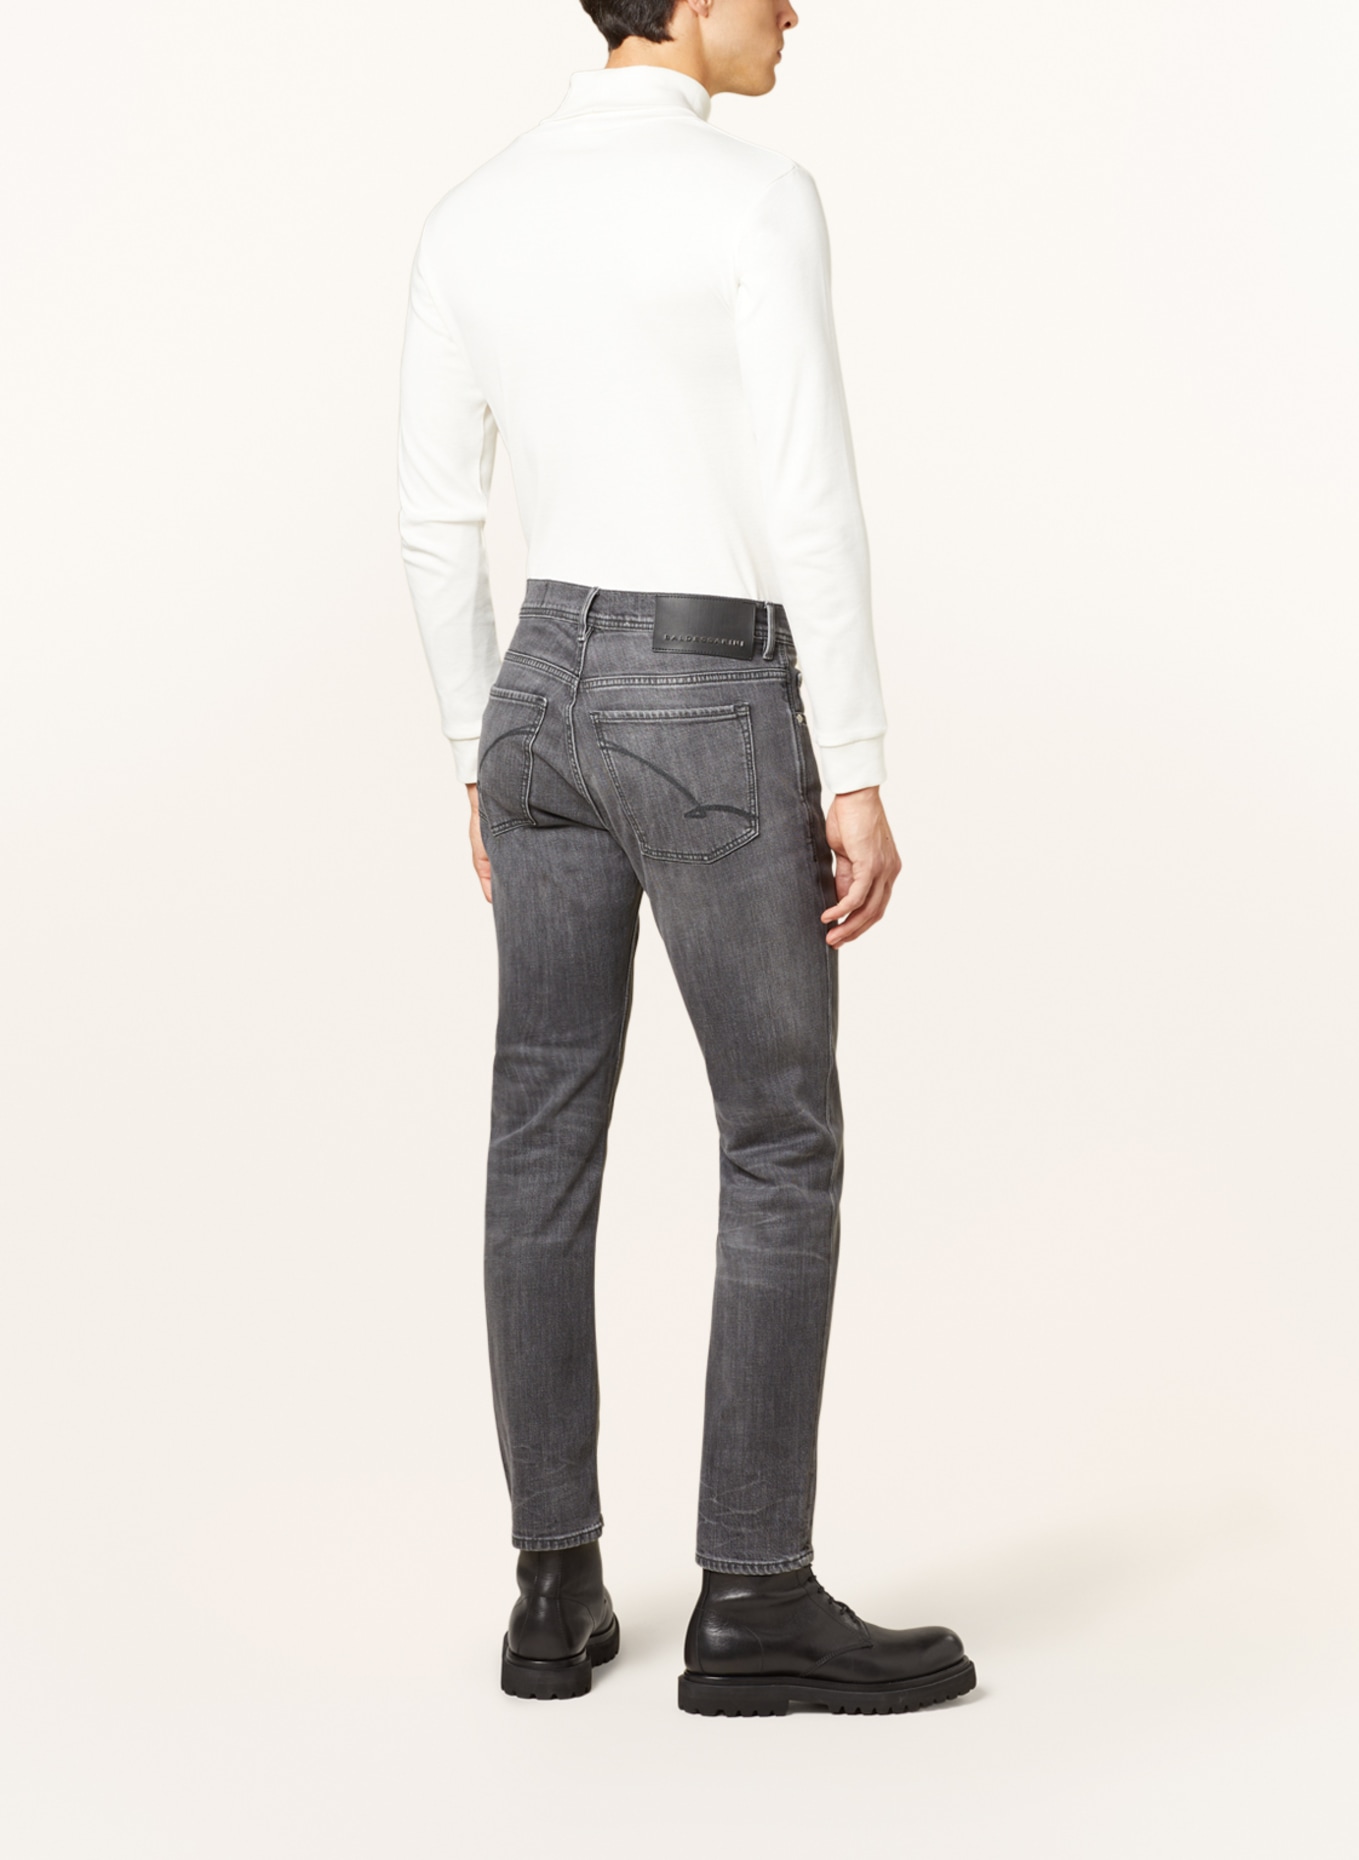 BALDESSARINI Jeans Regular Fit, Farbe: 9834 grey used buffies (Bild 3)